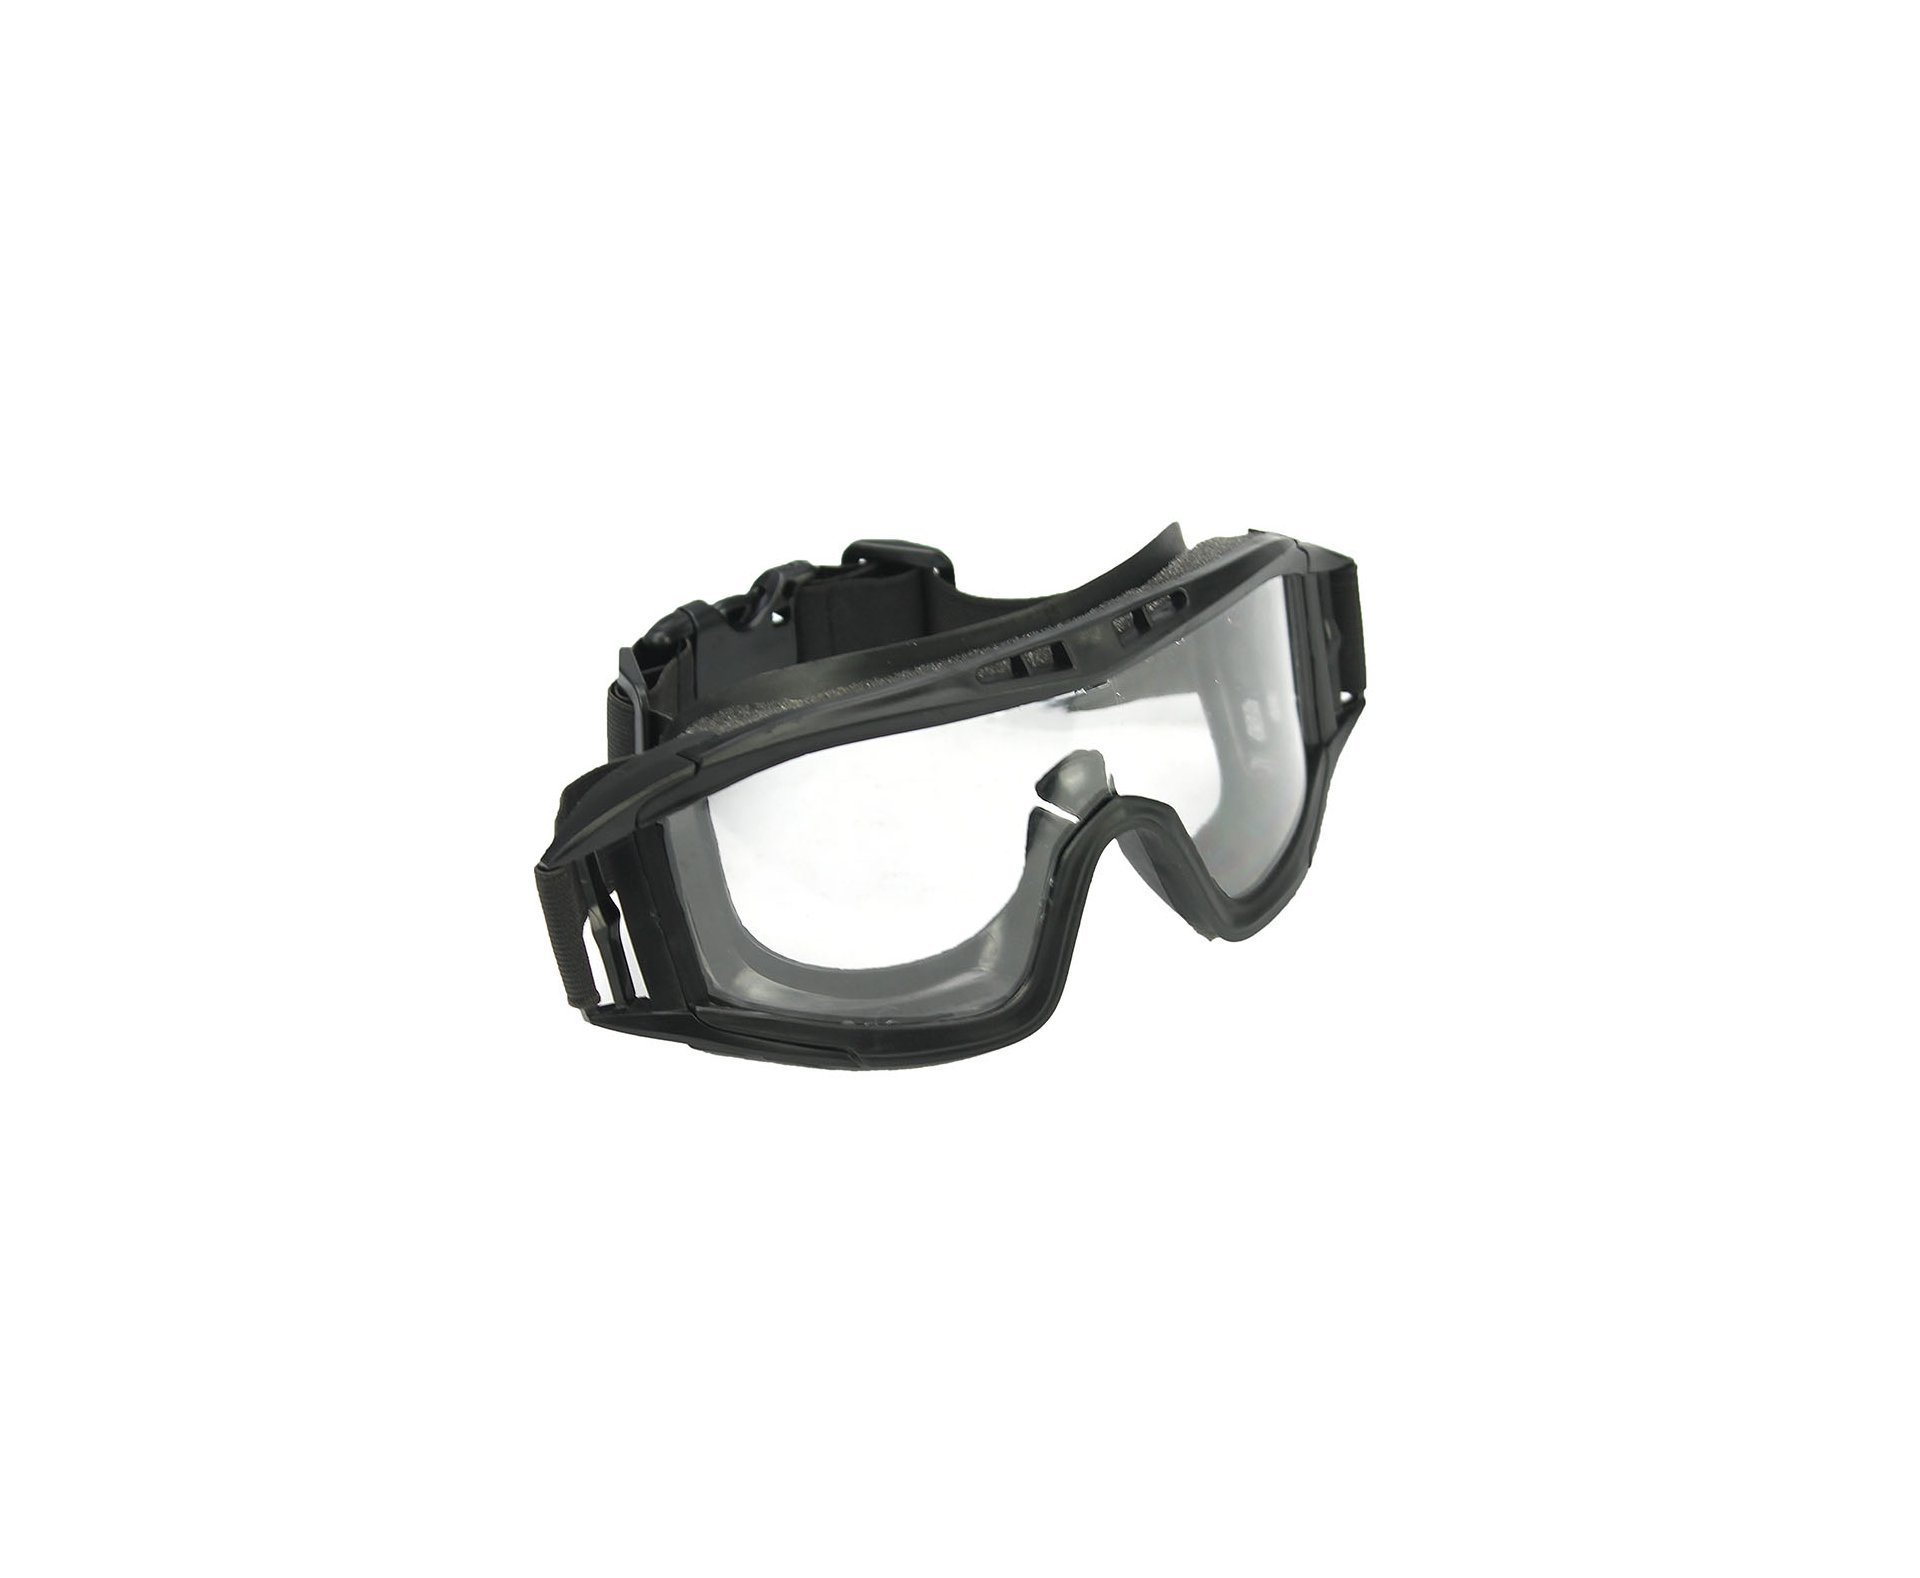 Oculos Tatico Goggle Medio C/ Lentes Policarbonato - Preto